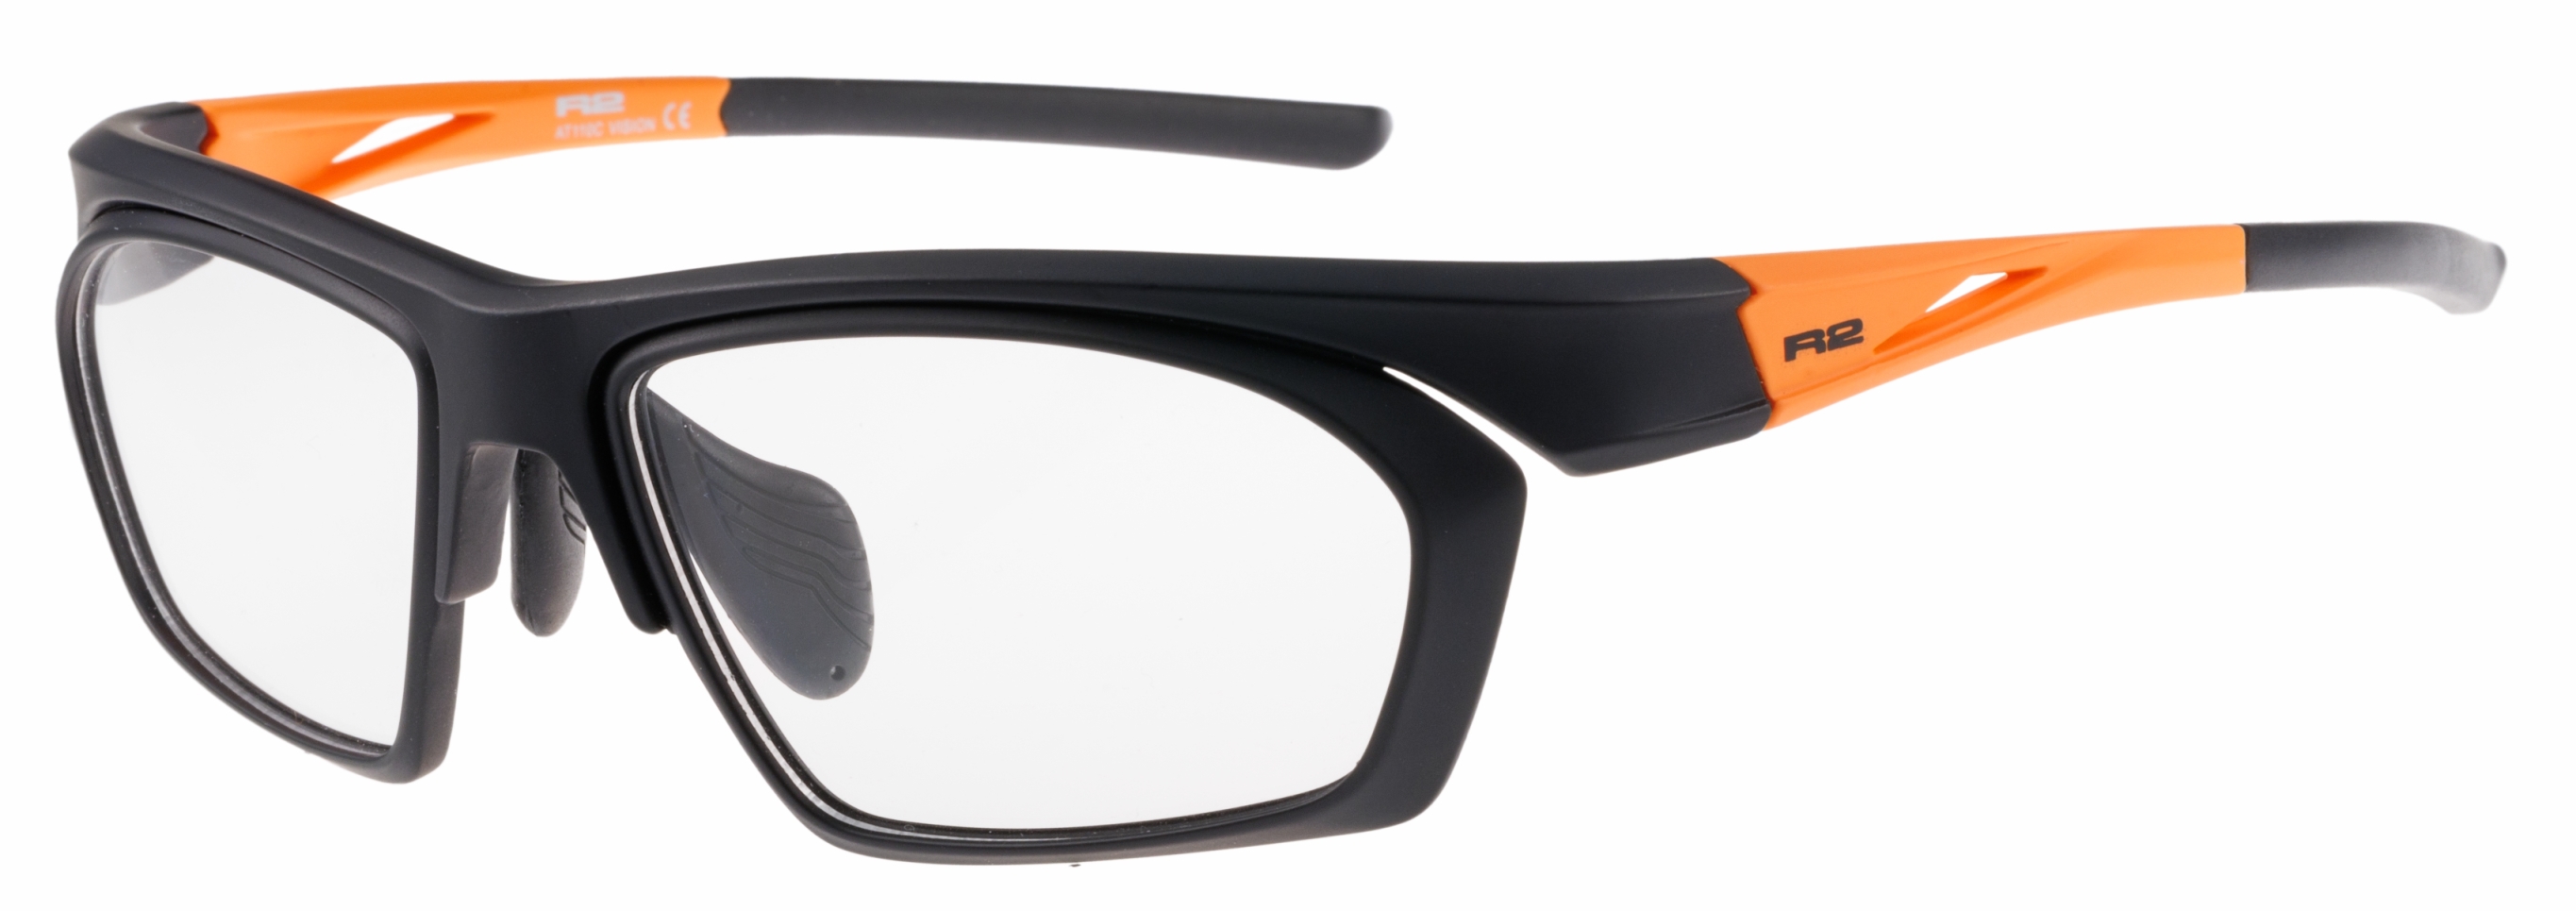 Sportovní dioptrické brýle R2 VISION AT110C - standard